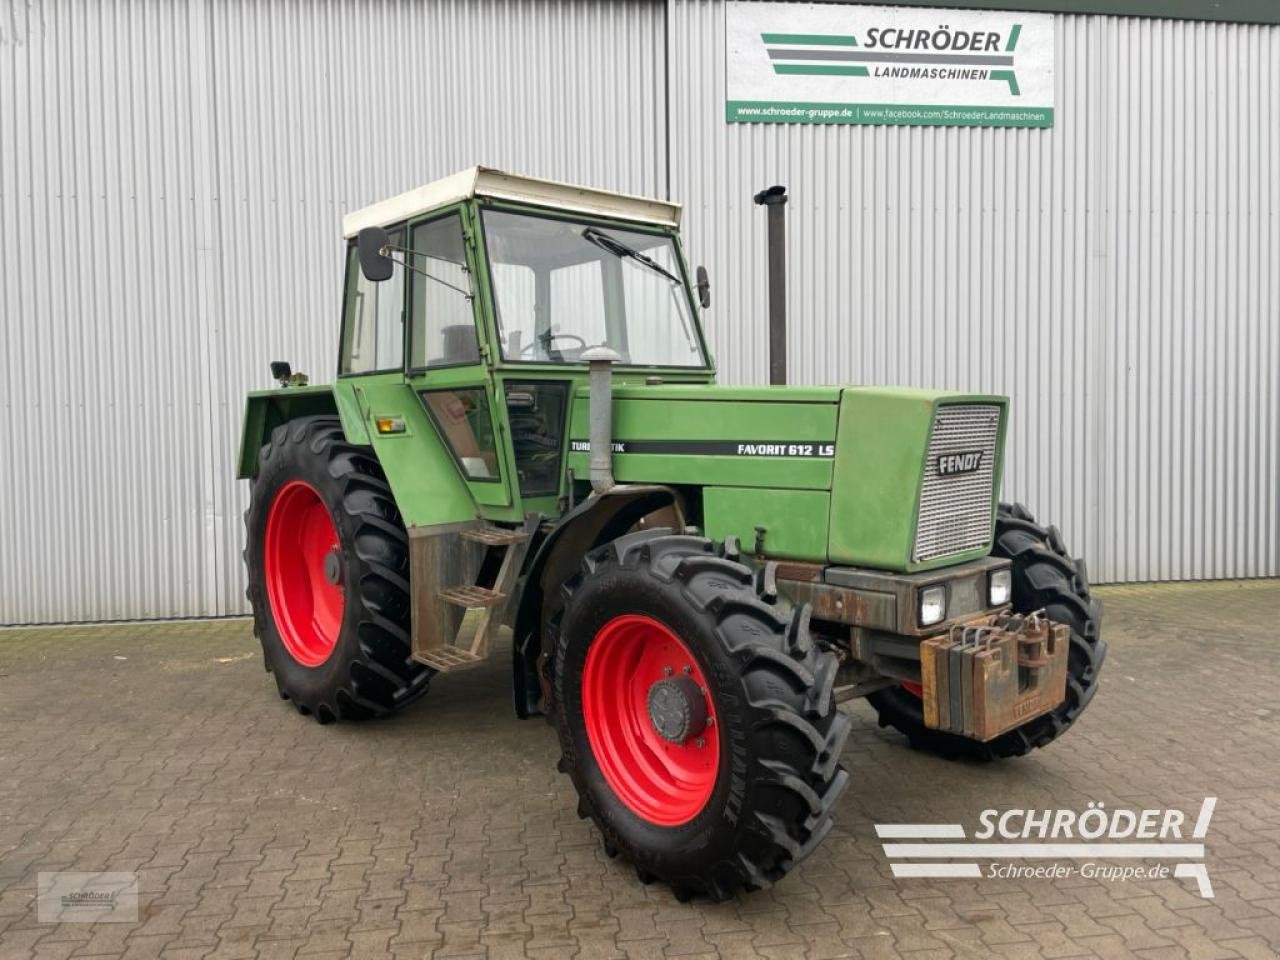 Fendt Favorit 612 SA tractor €18,985